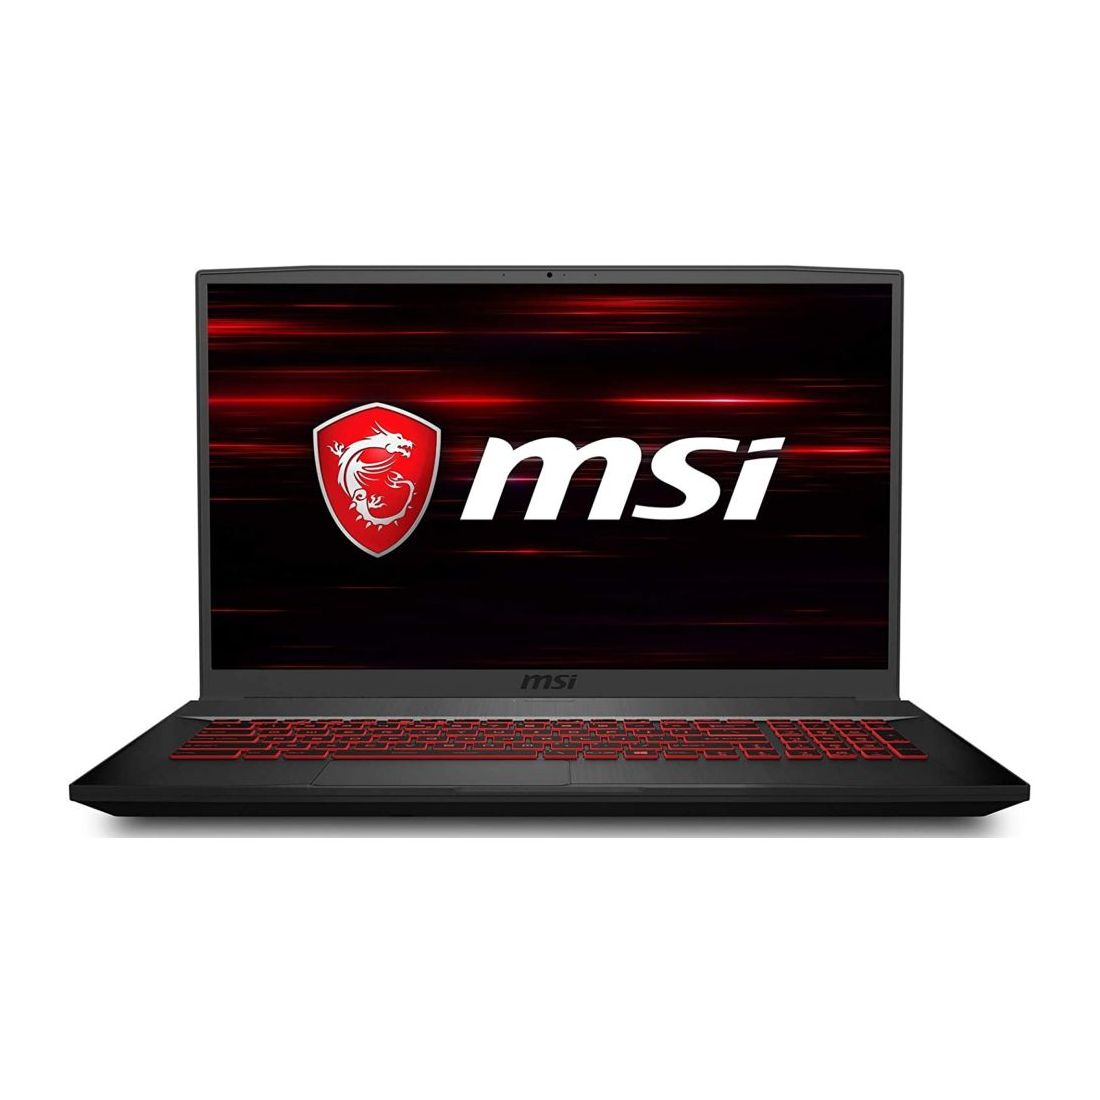 MSI GF75 Thin 10SCSR Gaming Laptop i7-10750H/16GB/512GB SSD/NVIDIA GeForce GTX 1650 Ti 4GB/17.3 inch FHD Display/144Hz/Windows 10/Black